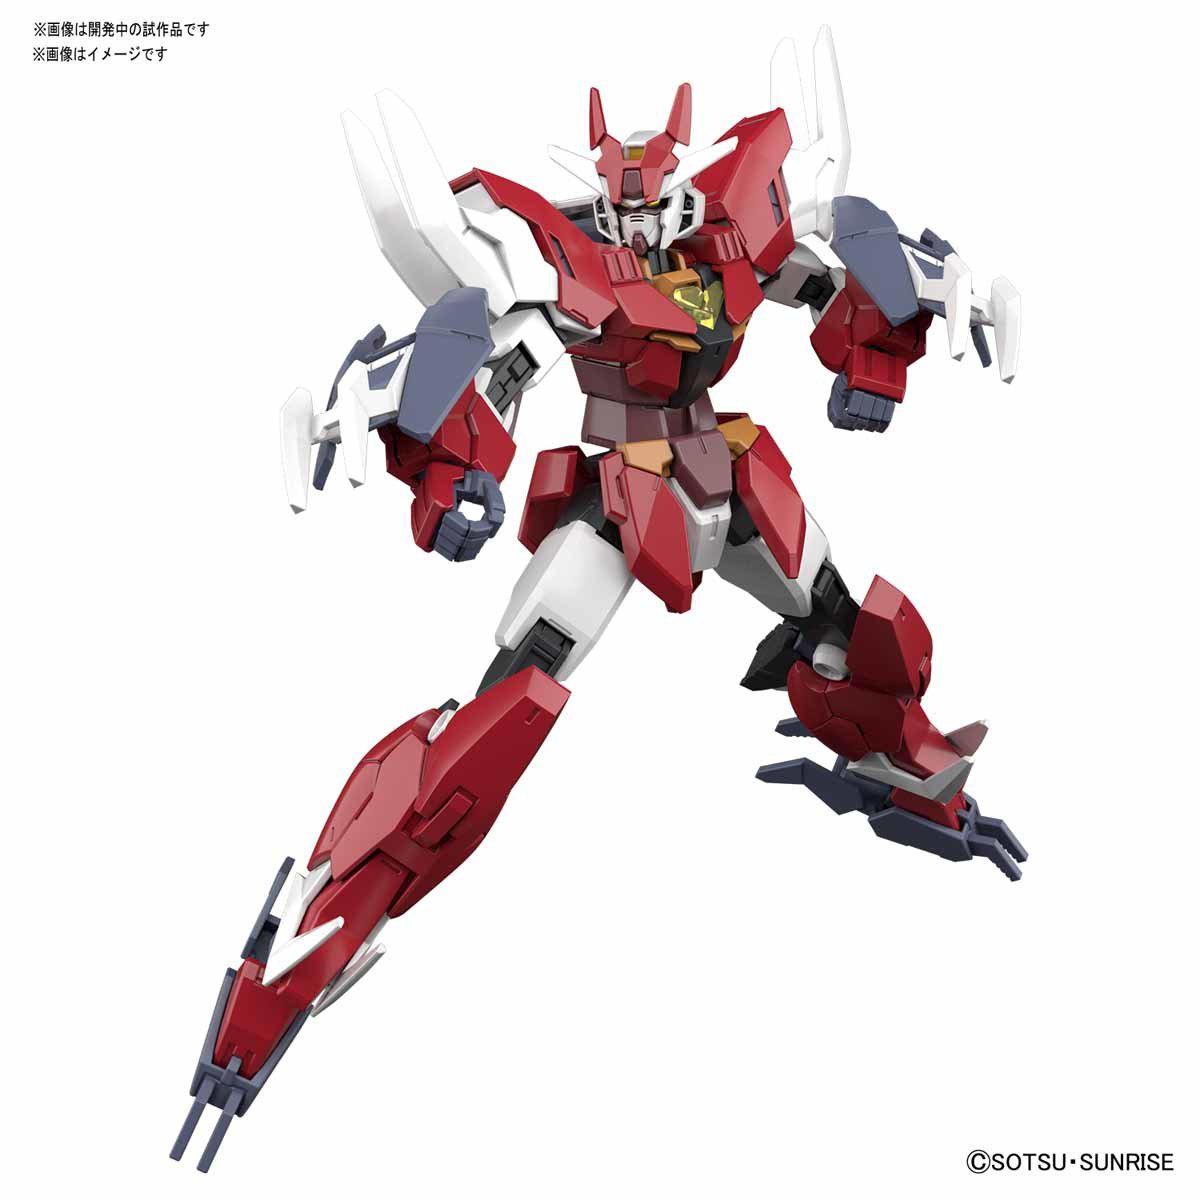 Gunpla HGBD 1/144 Core Gundam (Real Type Color) & Marsfour Unit-Bandai-Ace Cards & Collectibles